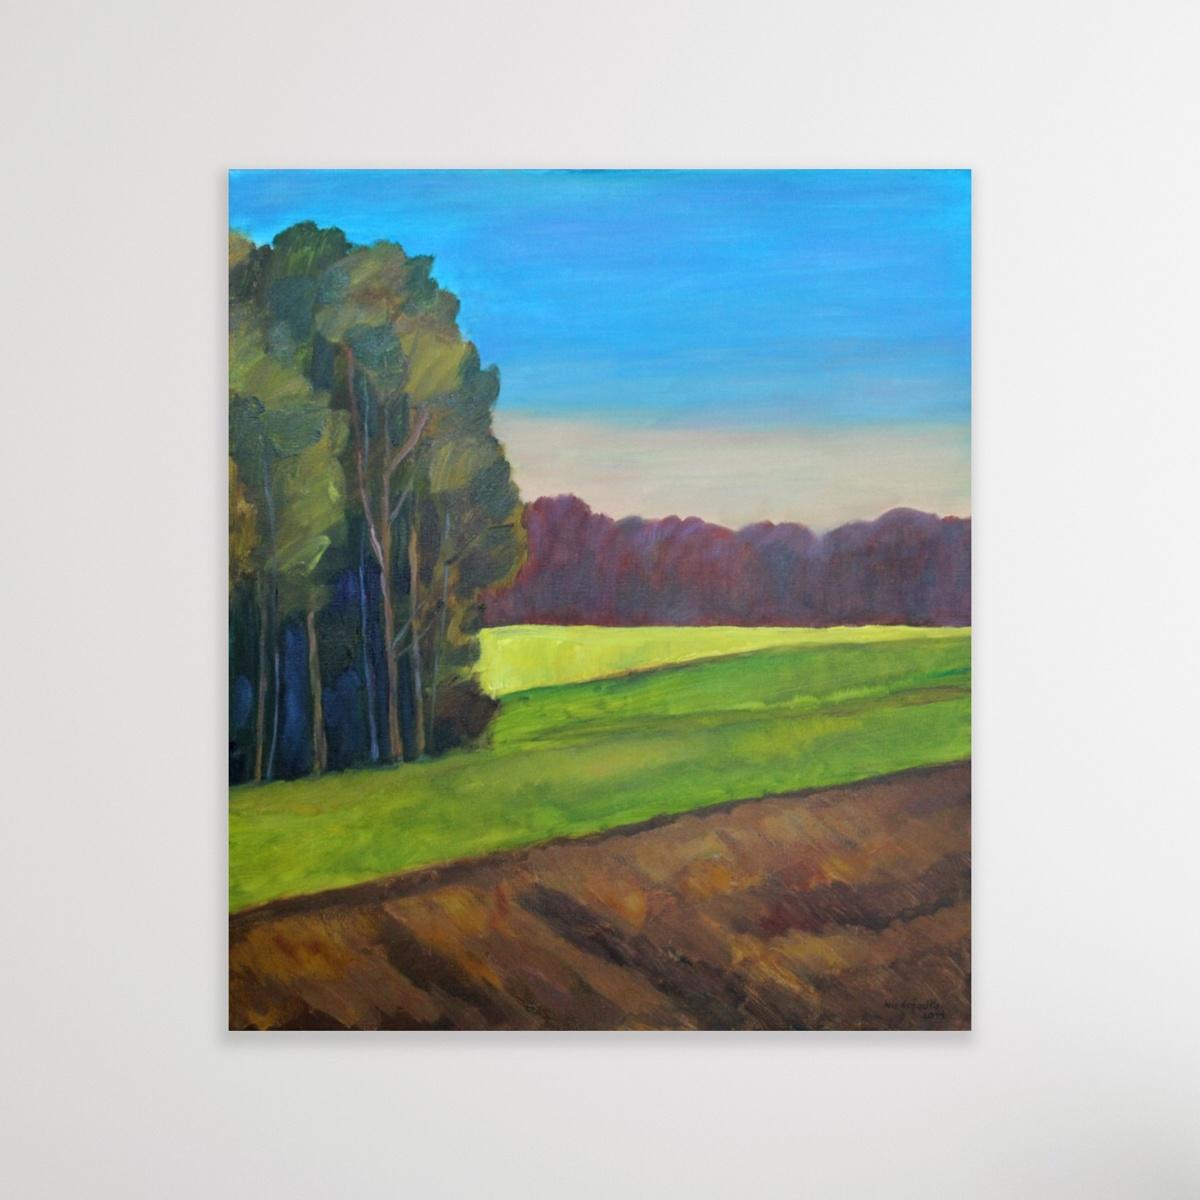 Autumn silence - XXI century, Oil landscape painting, Colourful - Brown Landscape Painting by Marek Niedojadło